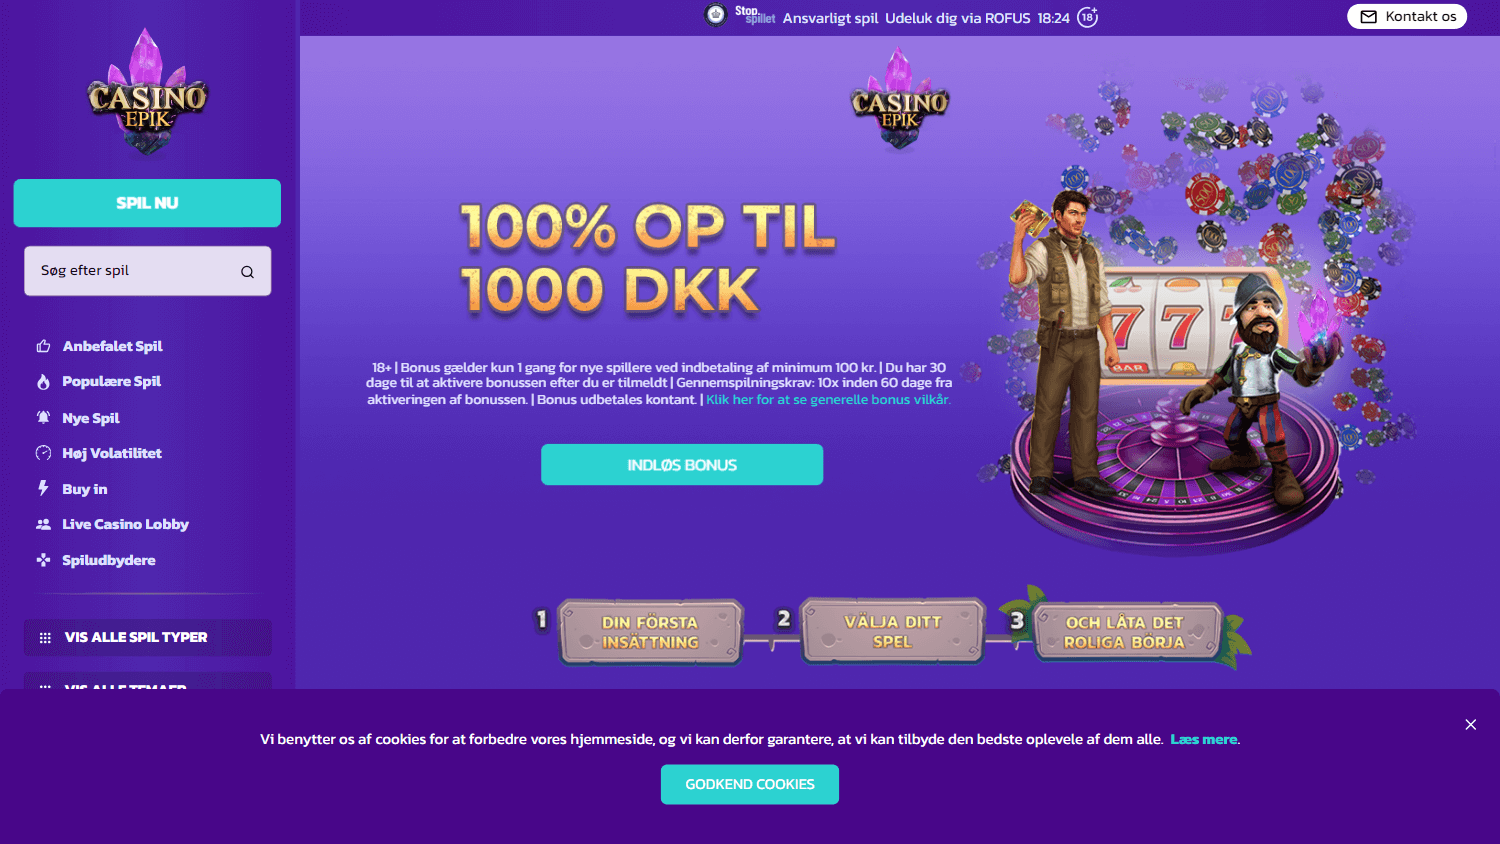 casino_epik_dk_promotions_desktop